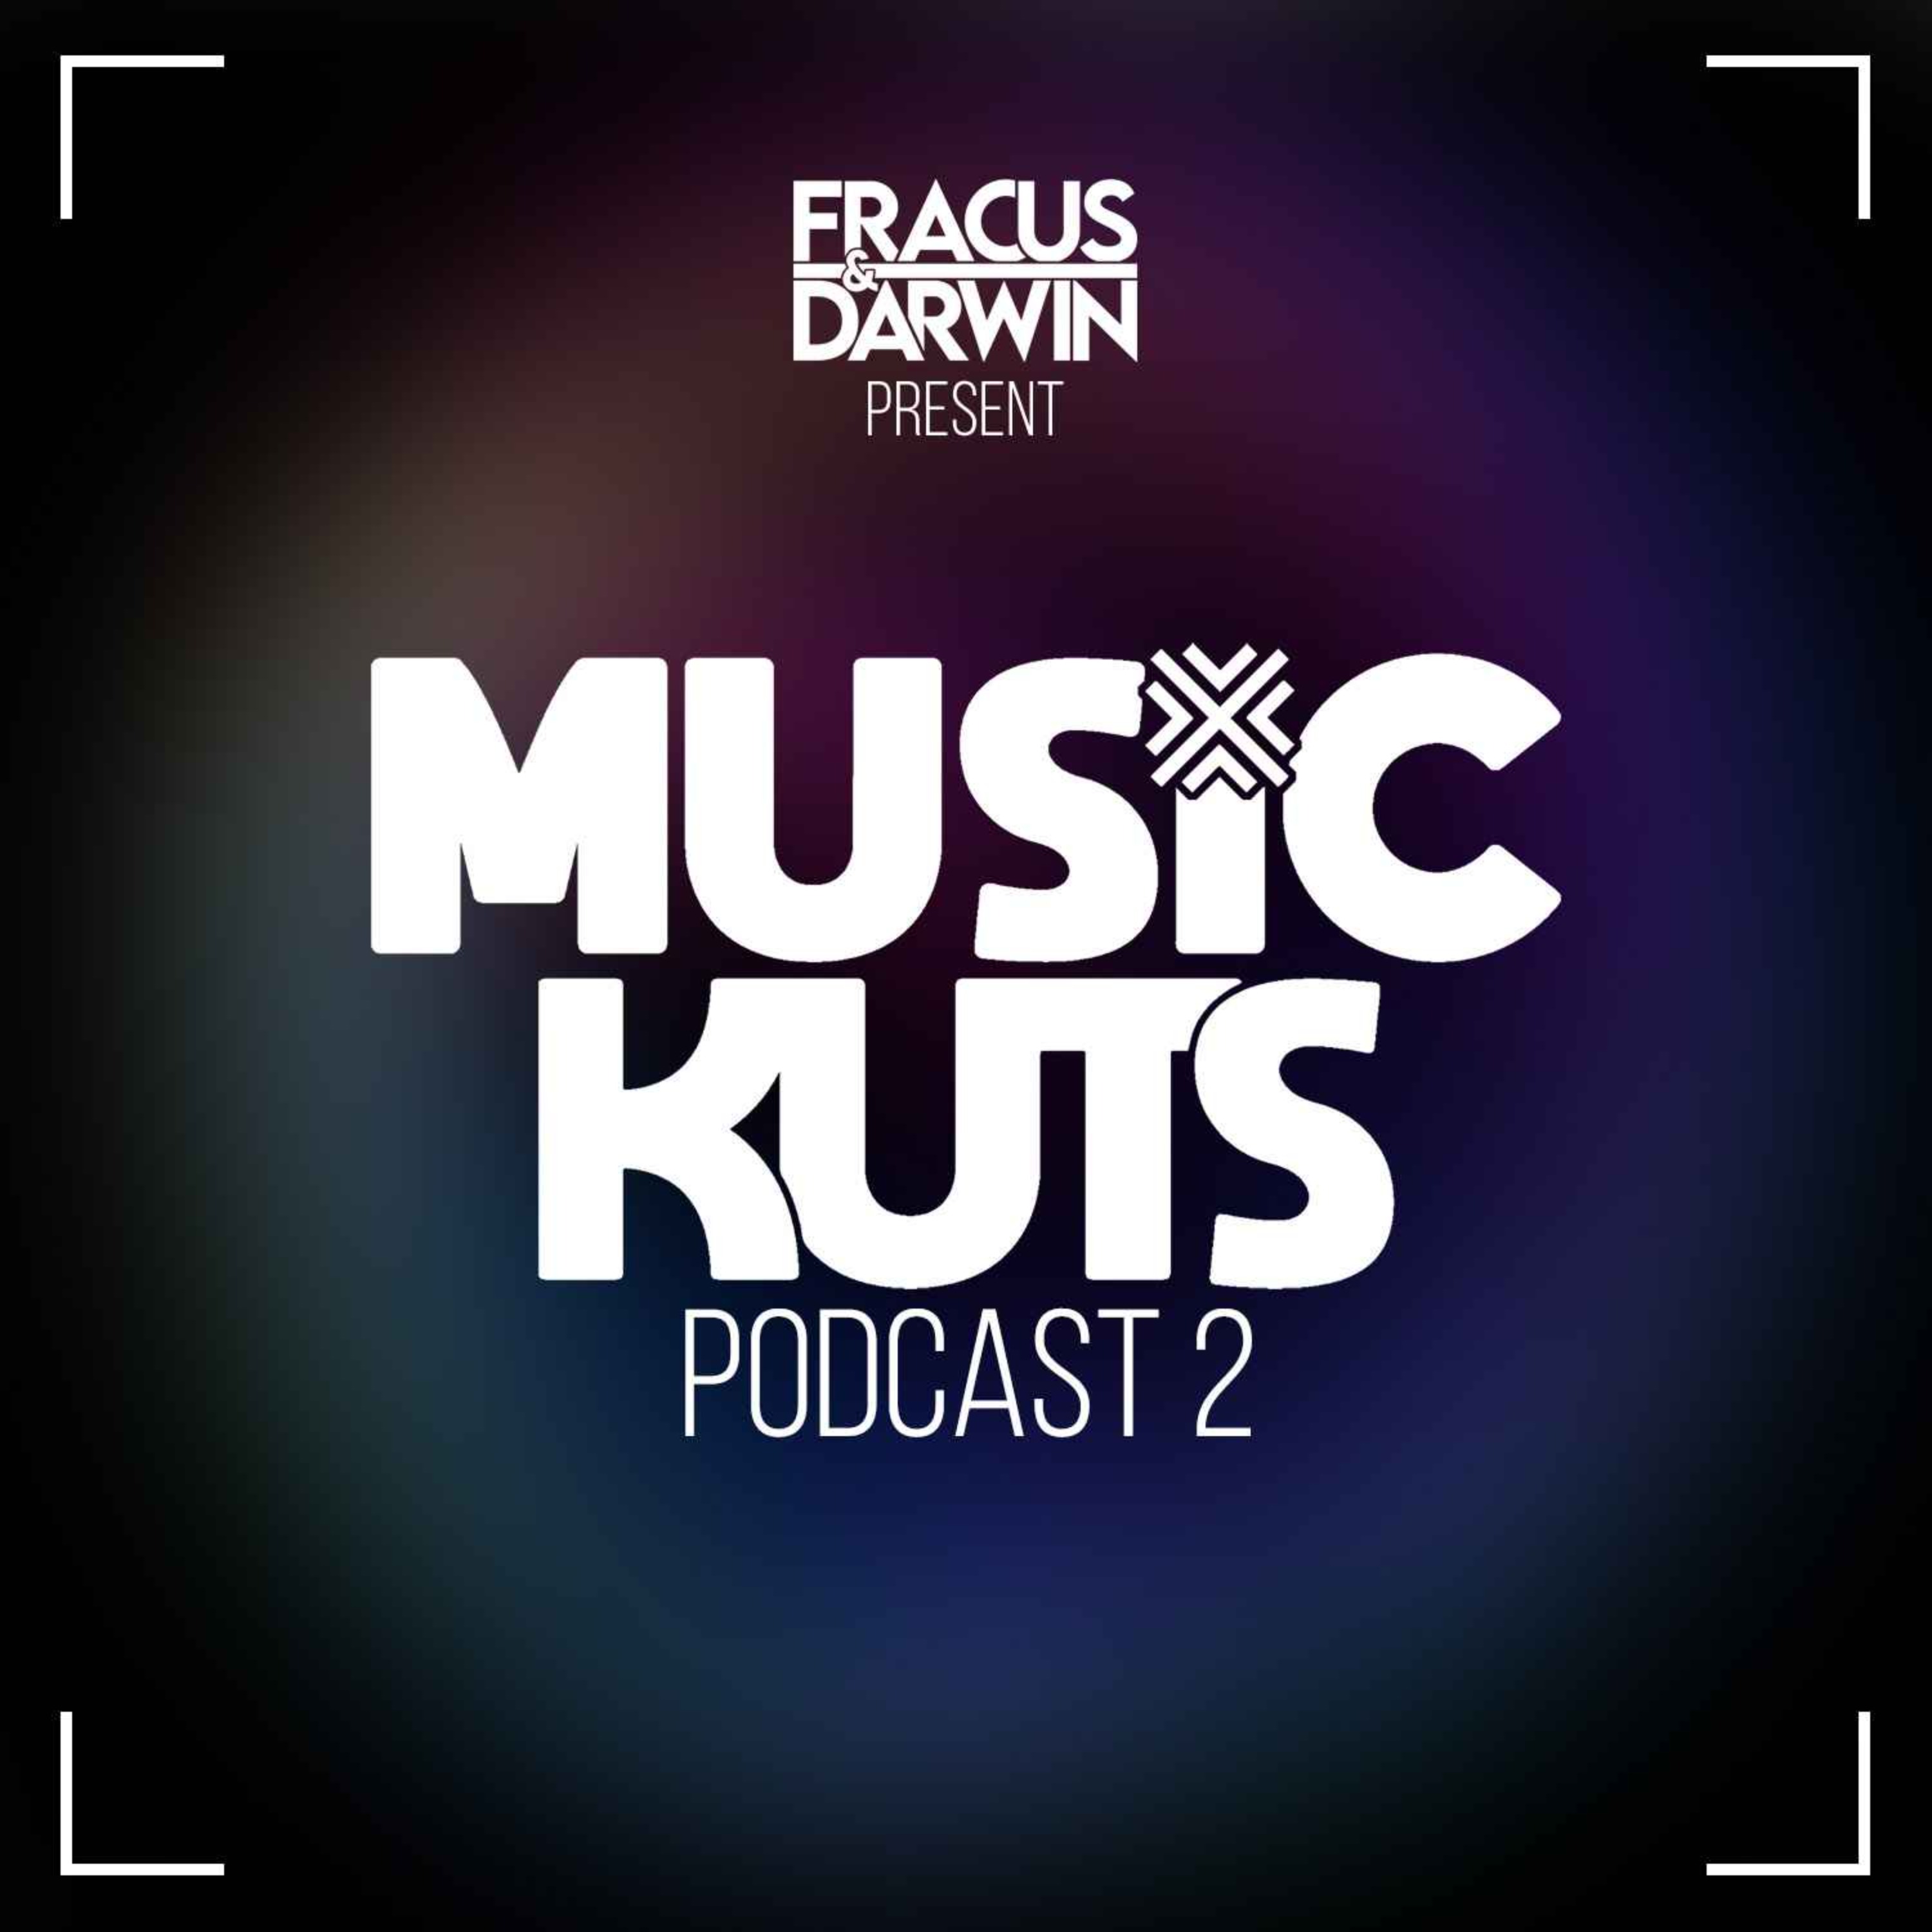 Music Kuts Podcast 2